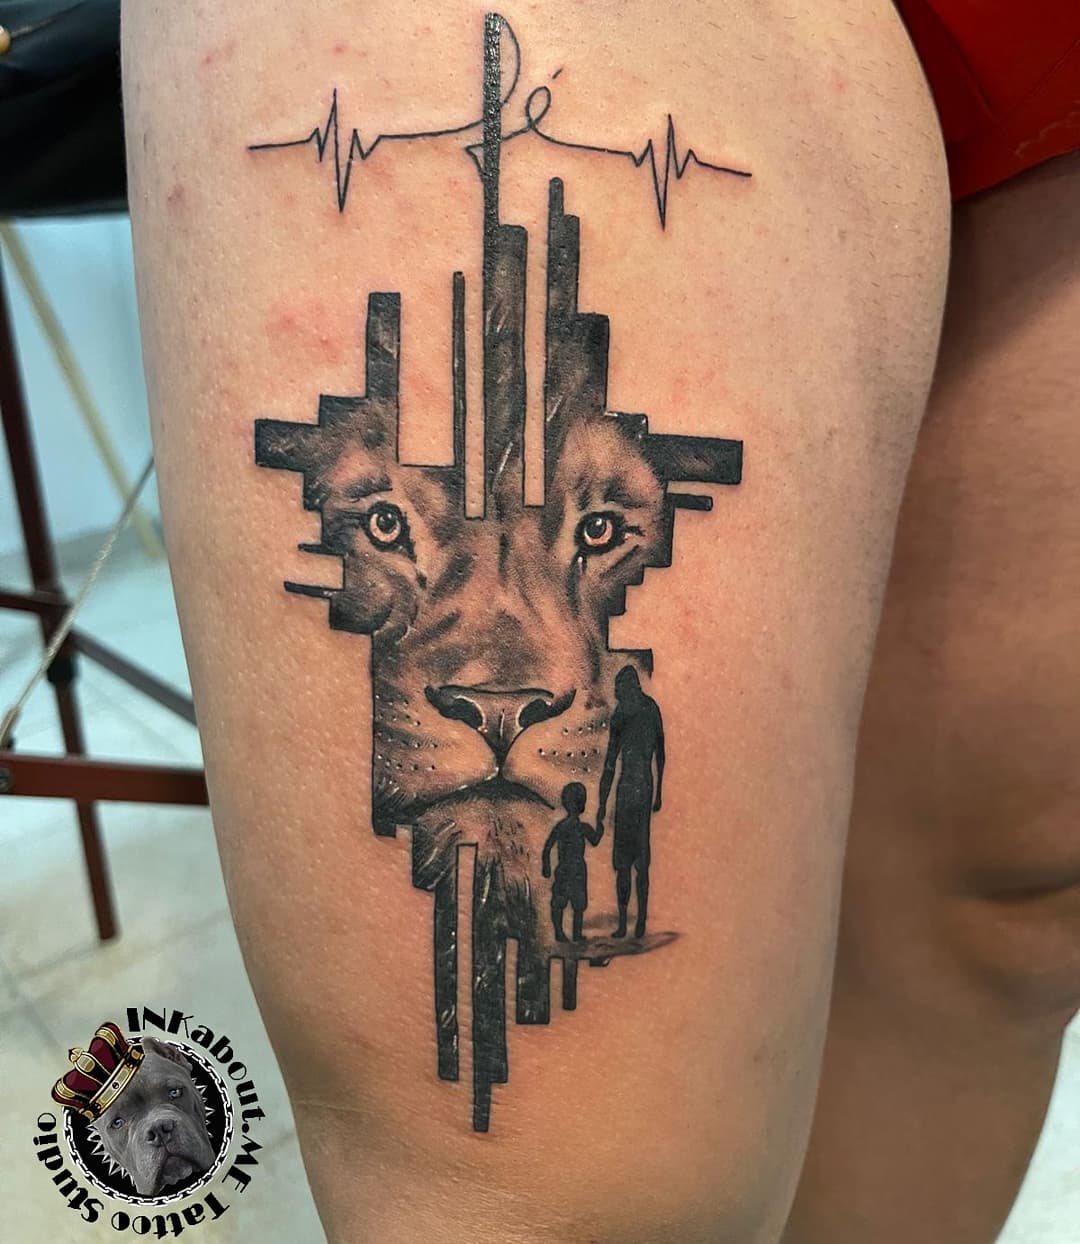 Tatuaje de león muslo hombre niño